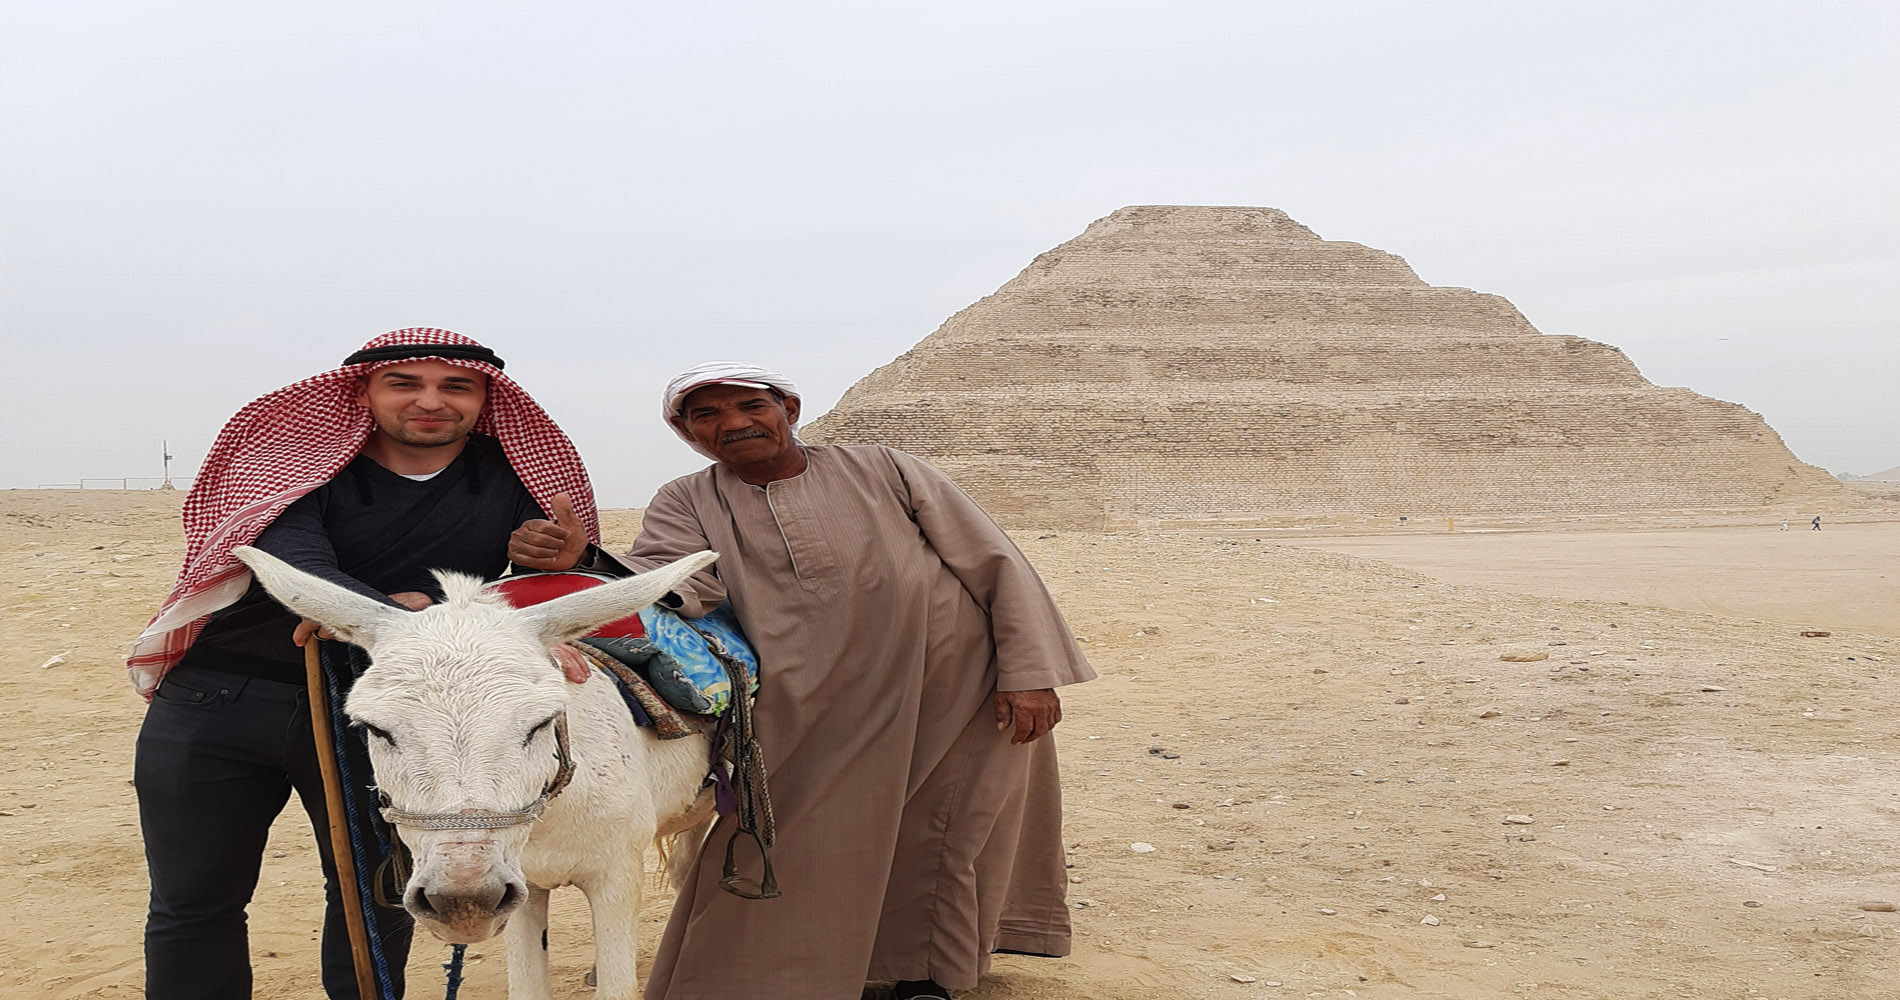 Saqqara step pyramids and Dahshour pyramids include Red and Bent Pyramids for History lovers